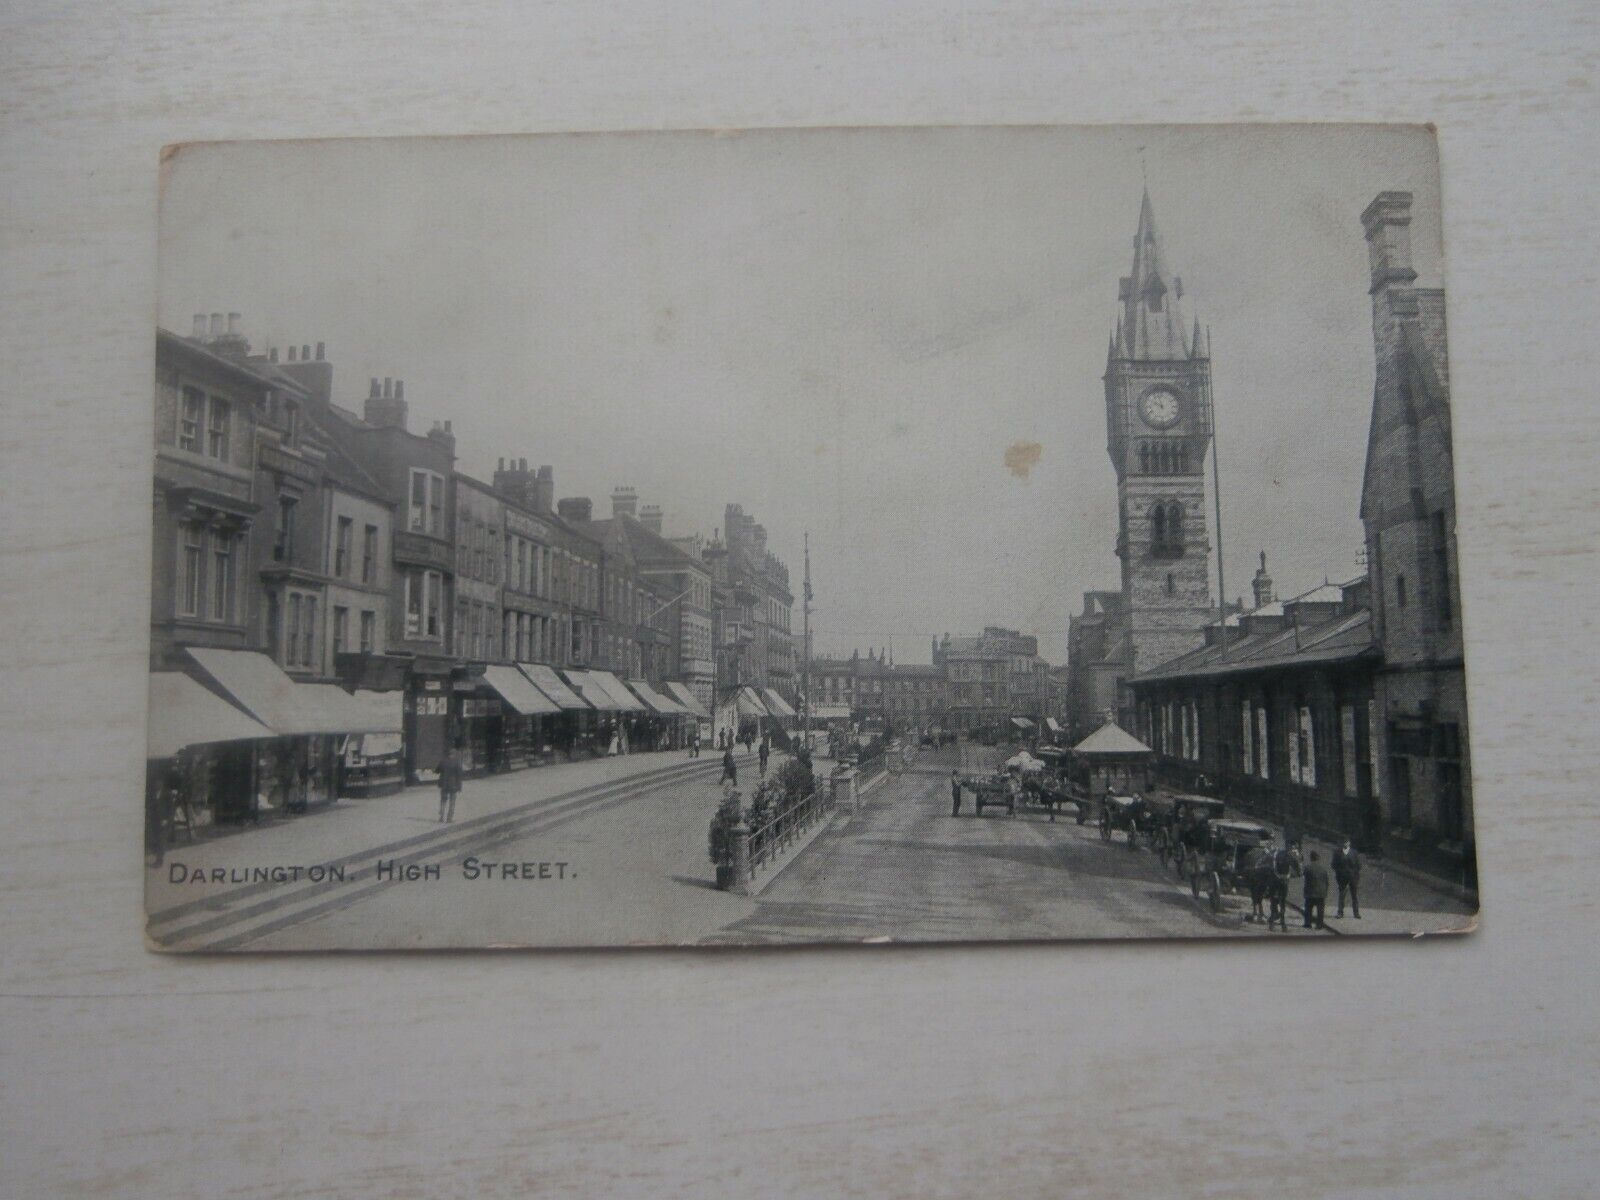 House Clearance - Darlington, Durham - High Street -  pre 1914 service (90b)